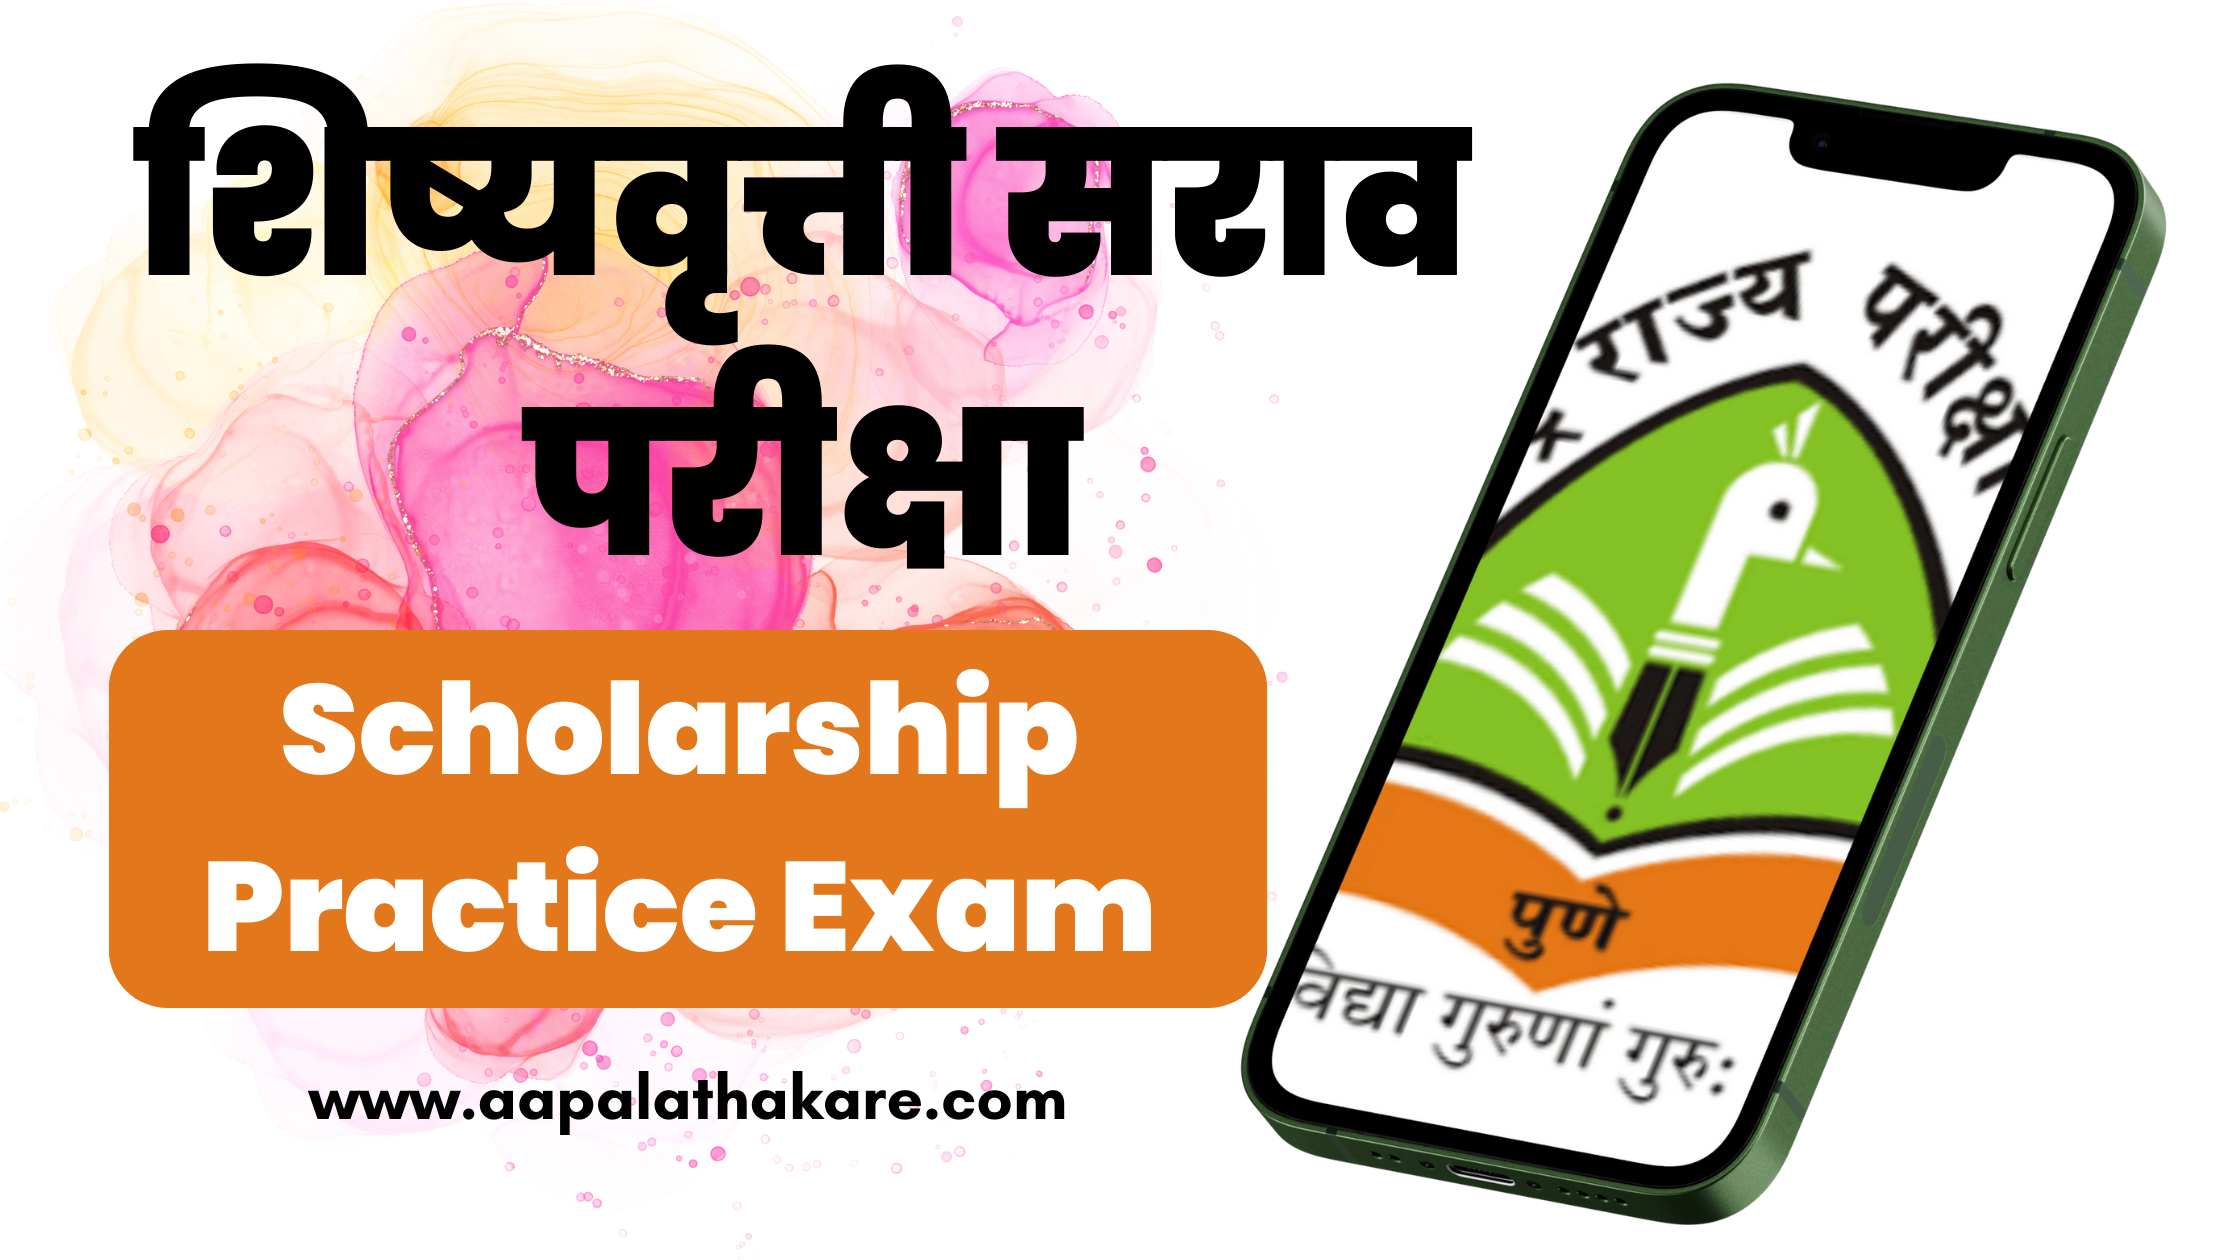 पूर्व उच्च प्राथमिक शिष्यवृत्ती परीक्षा (इयत्ता ५ वी) मराठी सराव परीक्षा Pre Higher Primary Scholarship Exam (Class 5th) Marathi Practice Exam